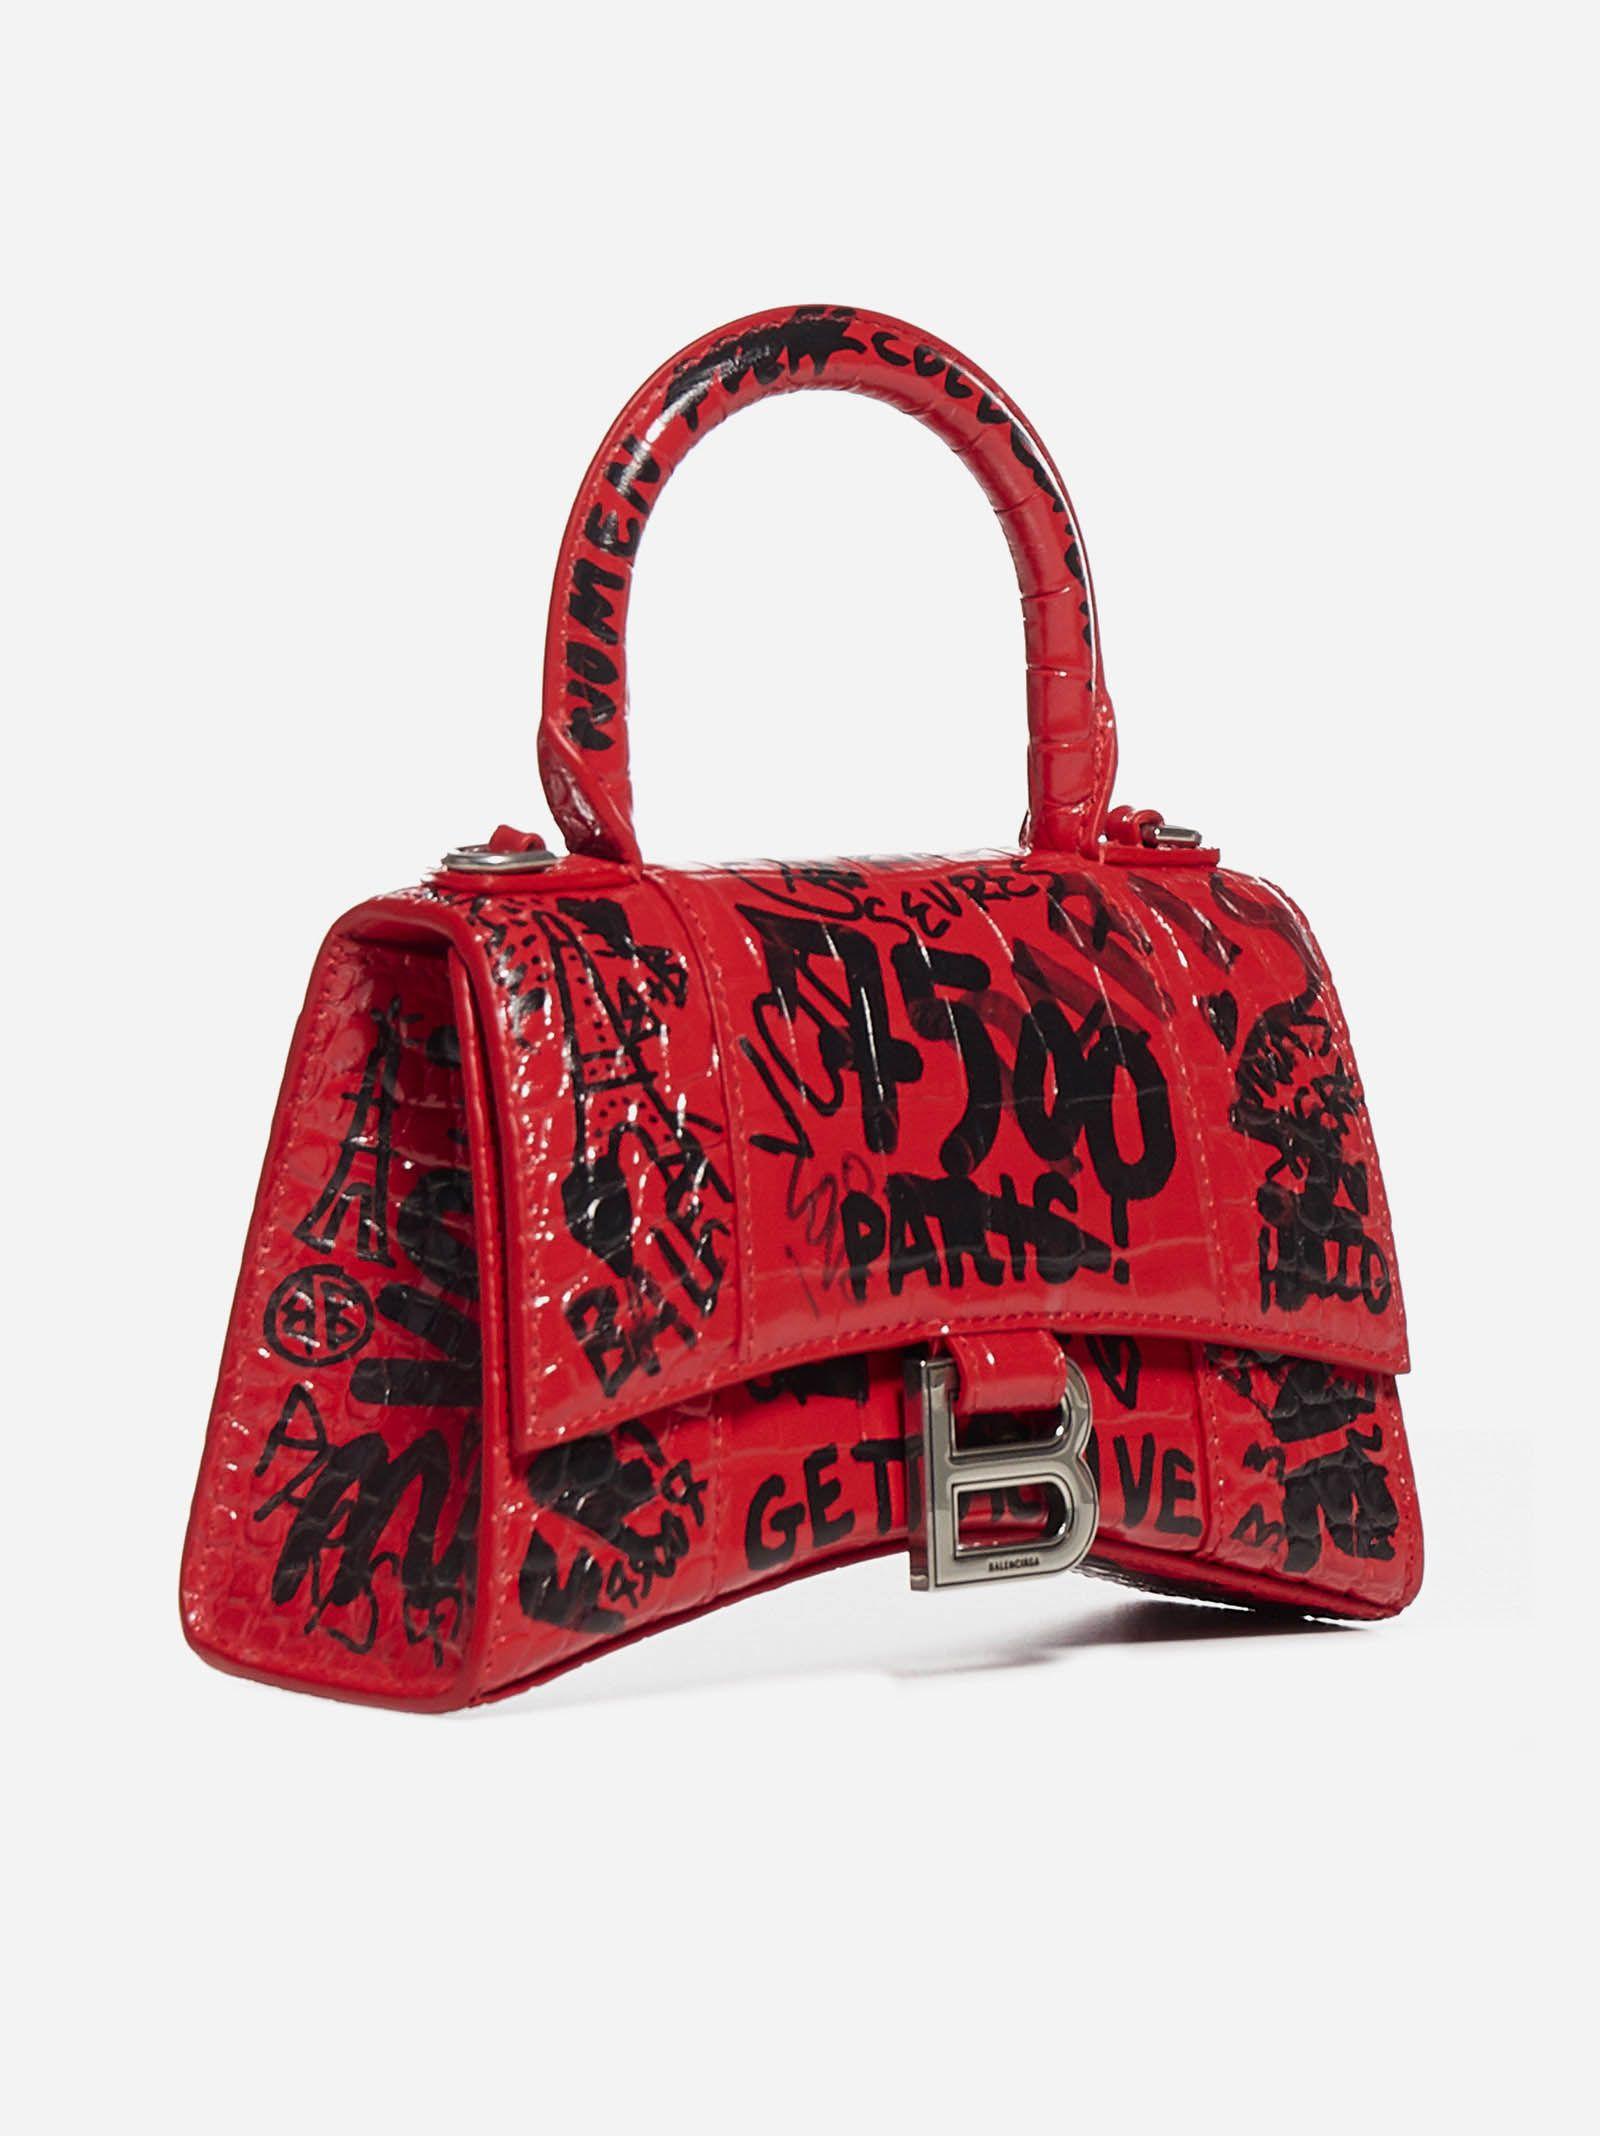 Calfskin handbag with graffiti print